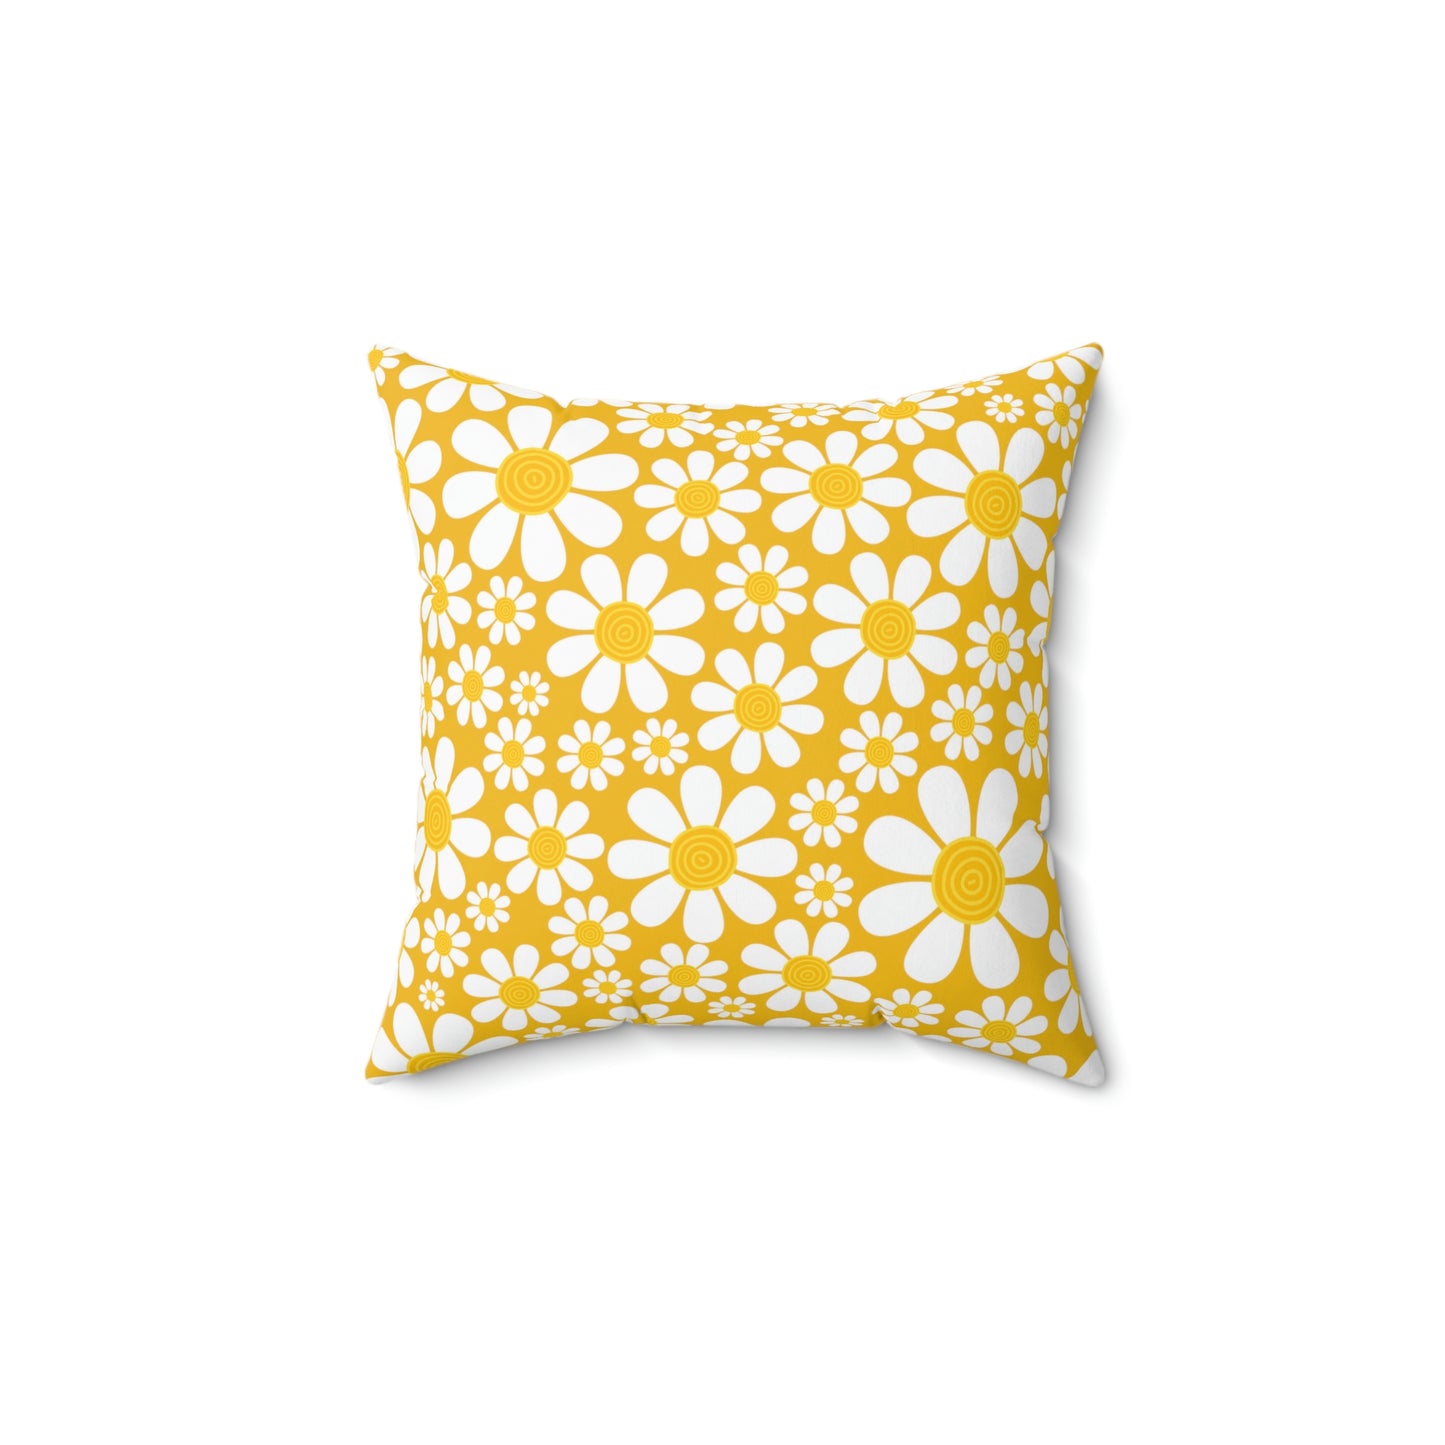 Retro Daisy Pillow / Yellow Throw Cushion